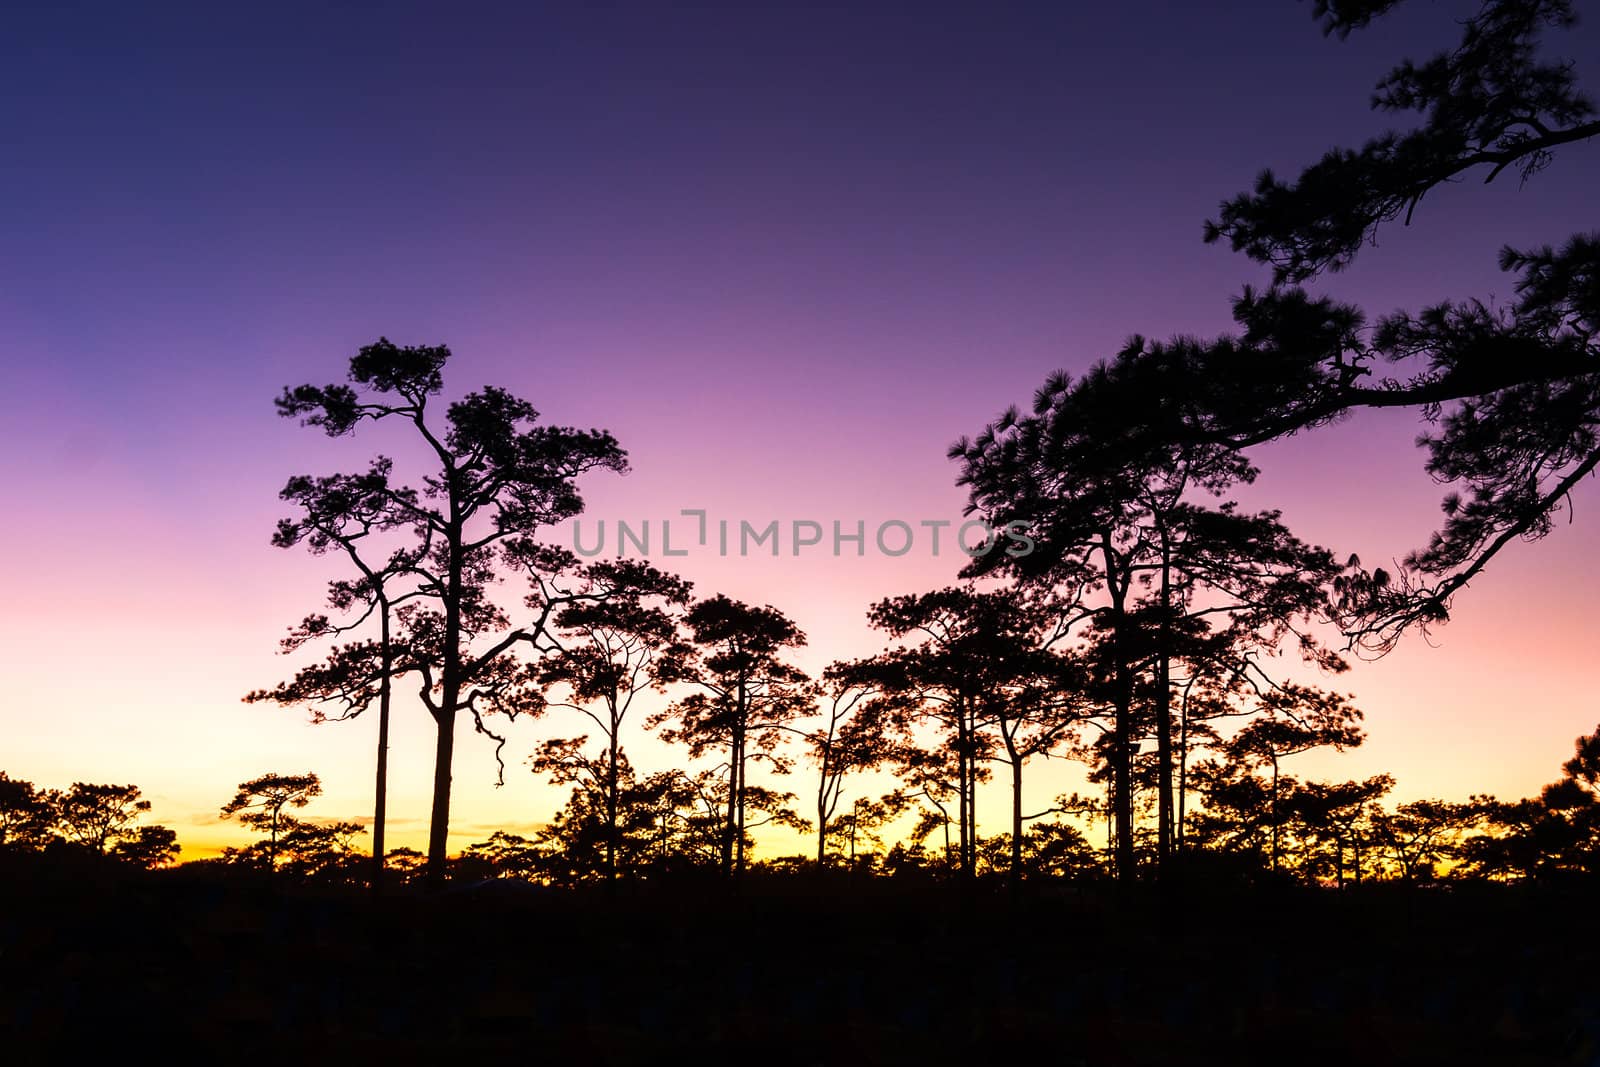 Sunset and Pine Trees at Phuktadung NationalPark, Thailand.